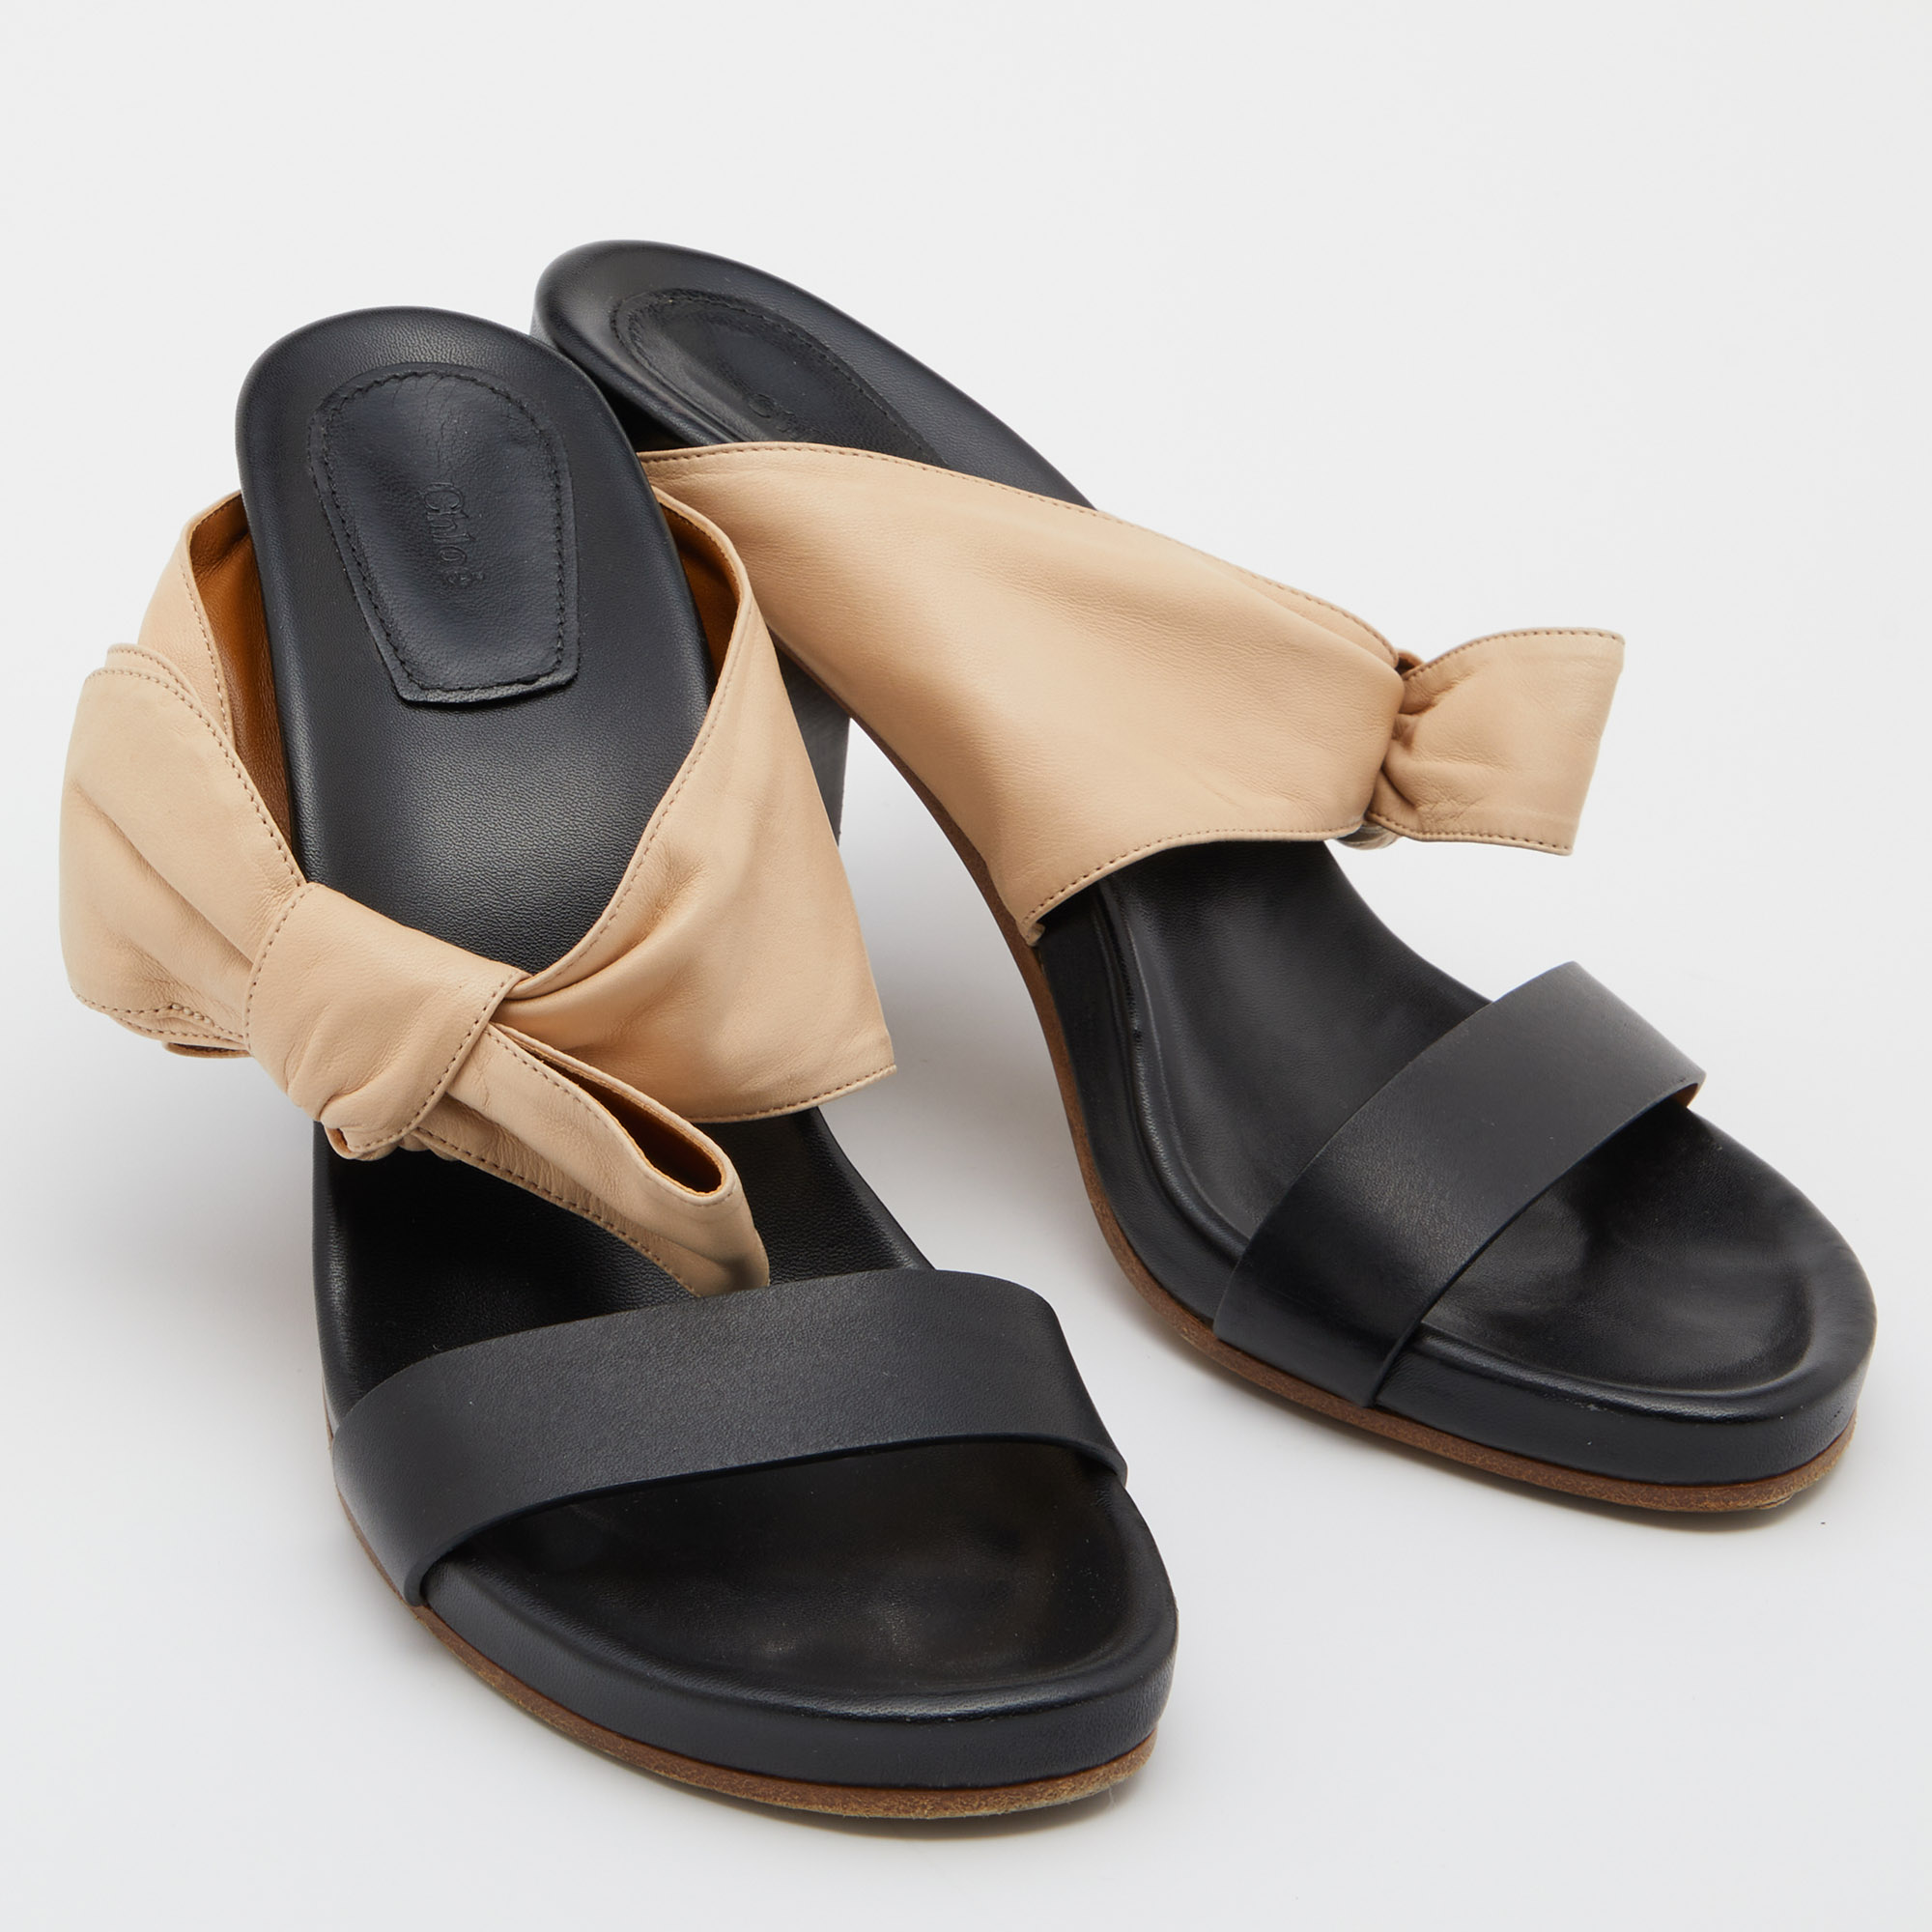 Chloe Black/Beige Leather Fod Flower Block Heel Sandals Size 40